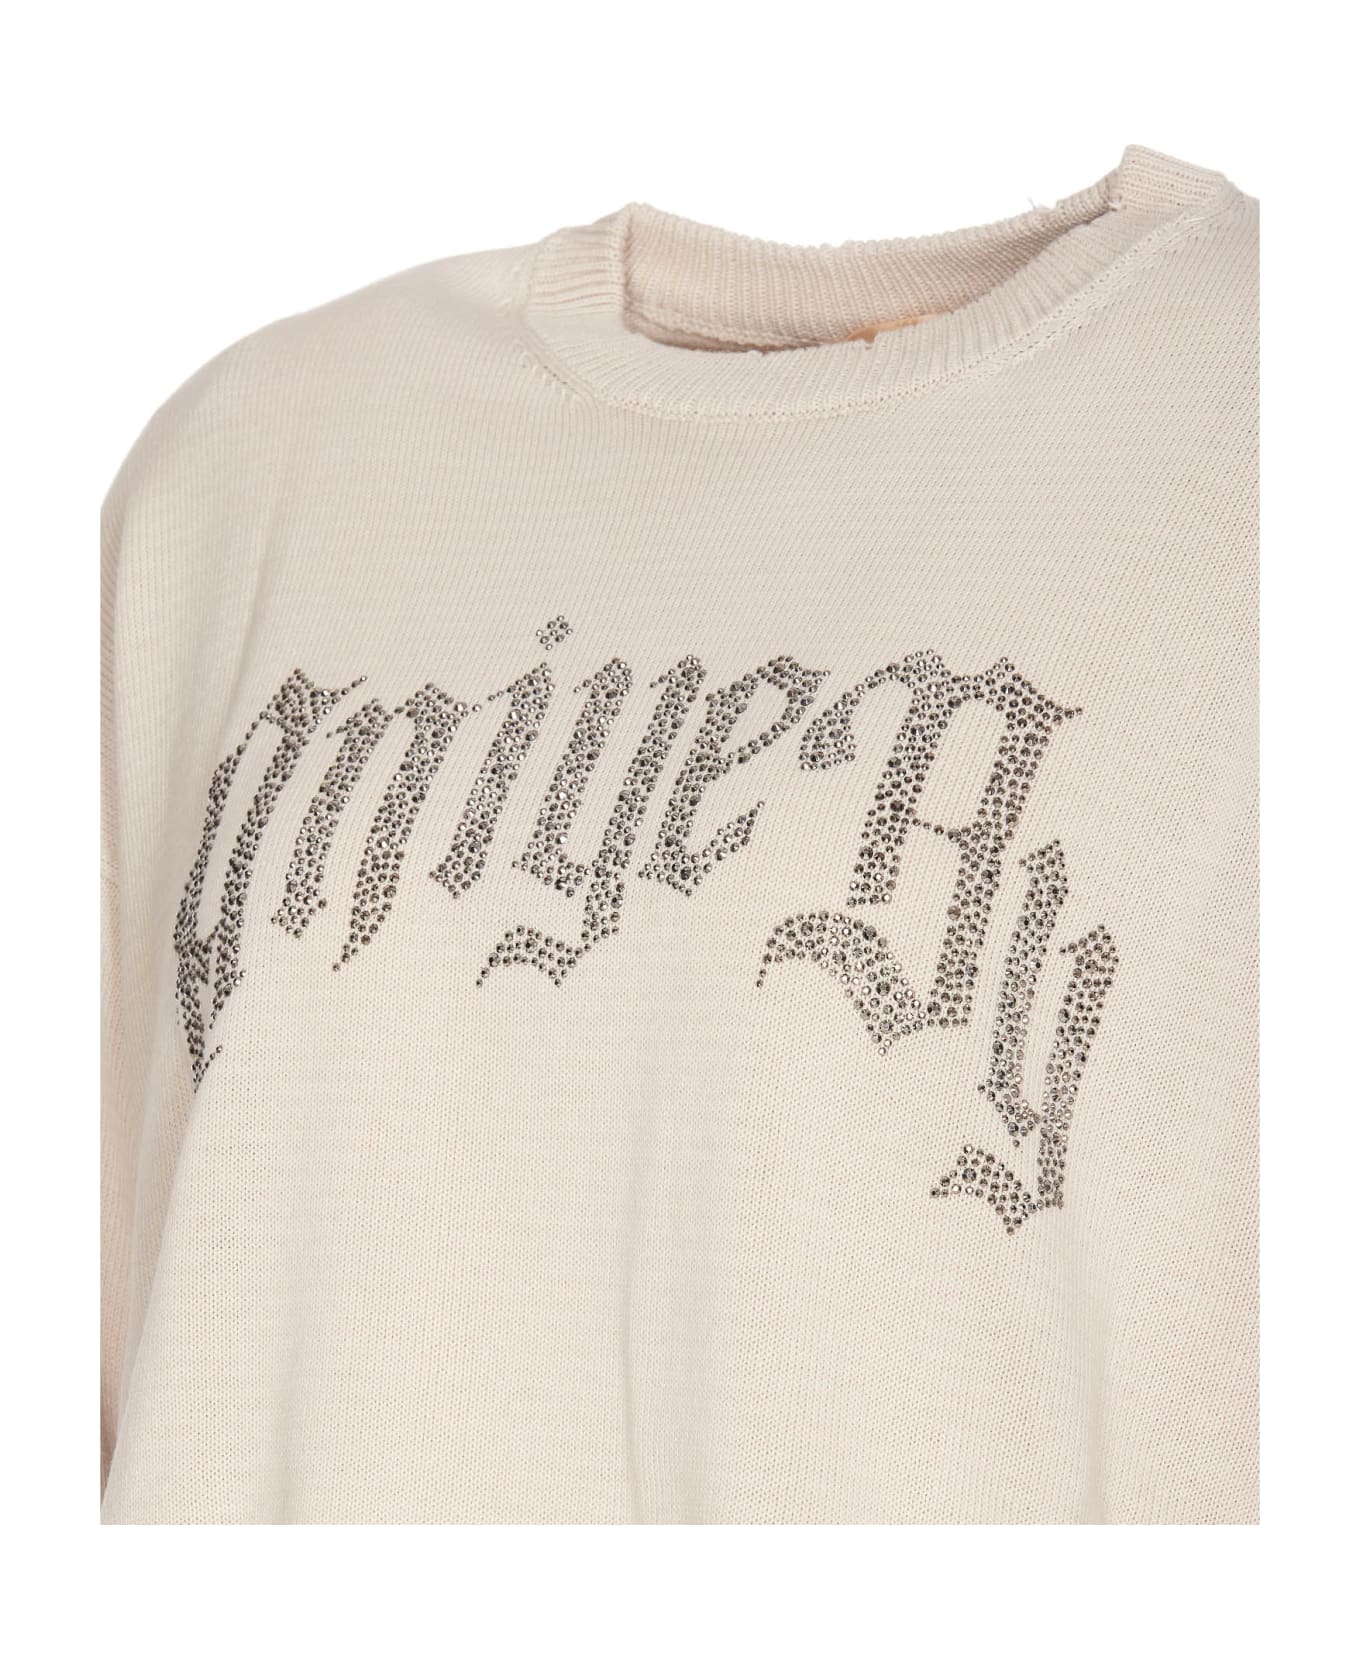 aniye by Logo Sweater - White フリース